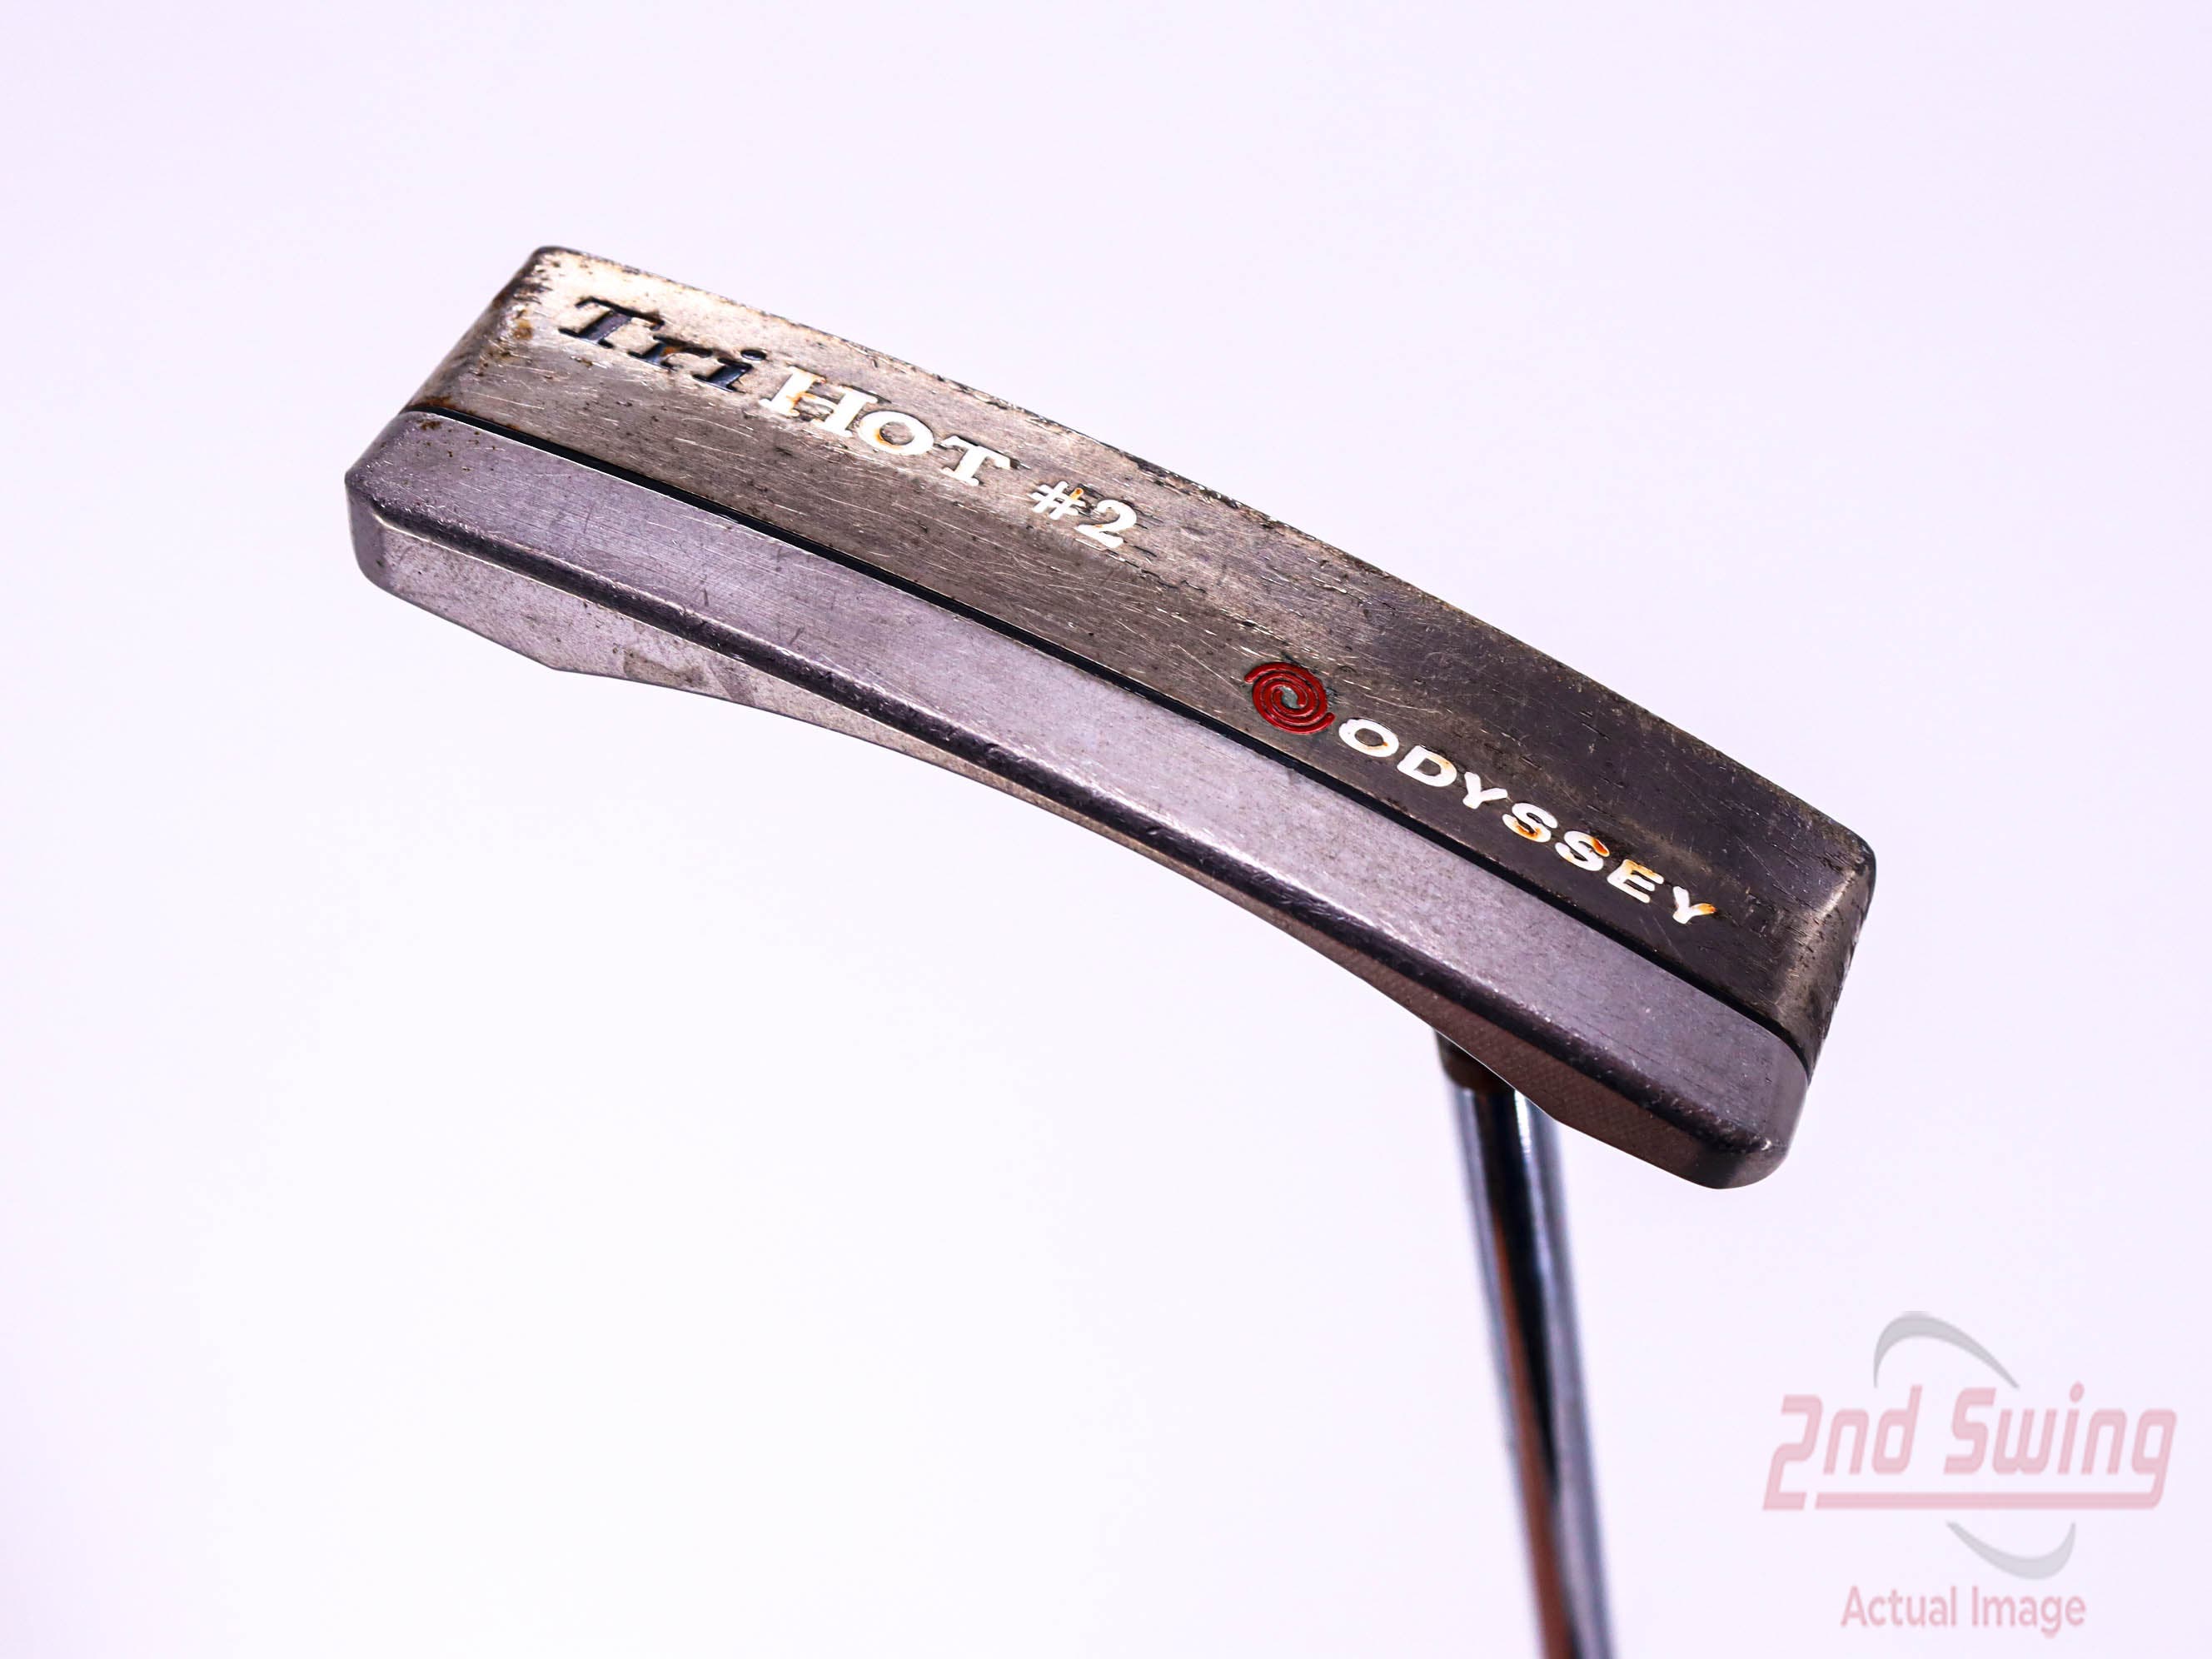 Odyssey Tri Hot 2 Putter | 2nd Swing Golf